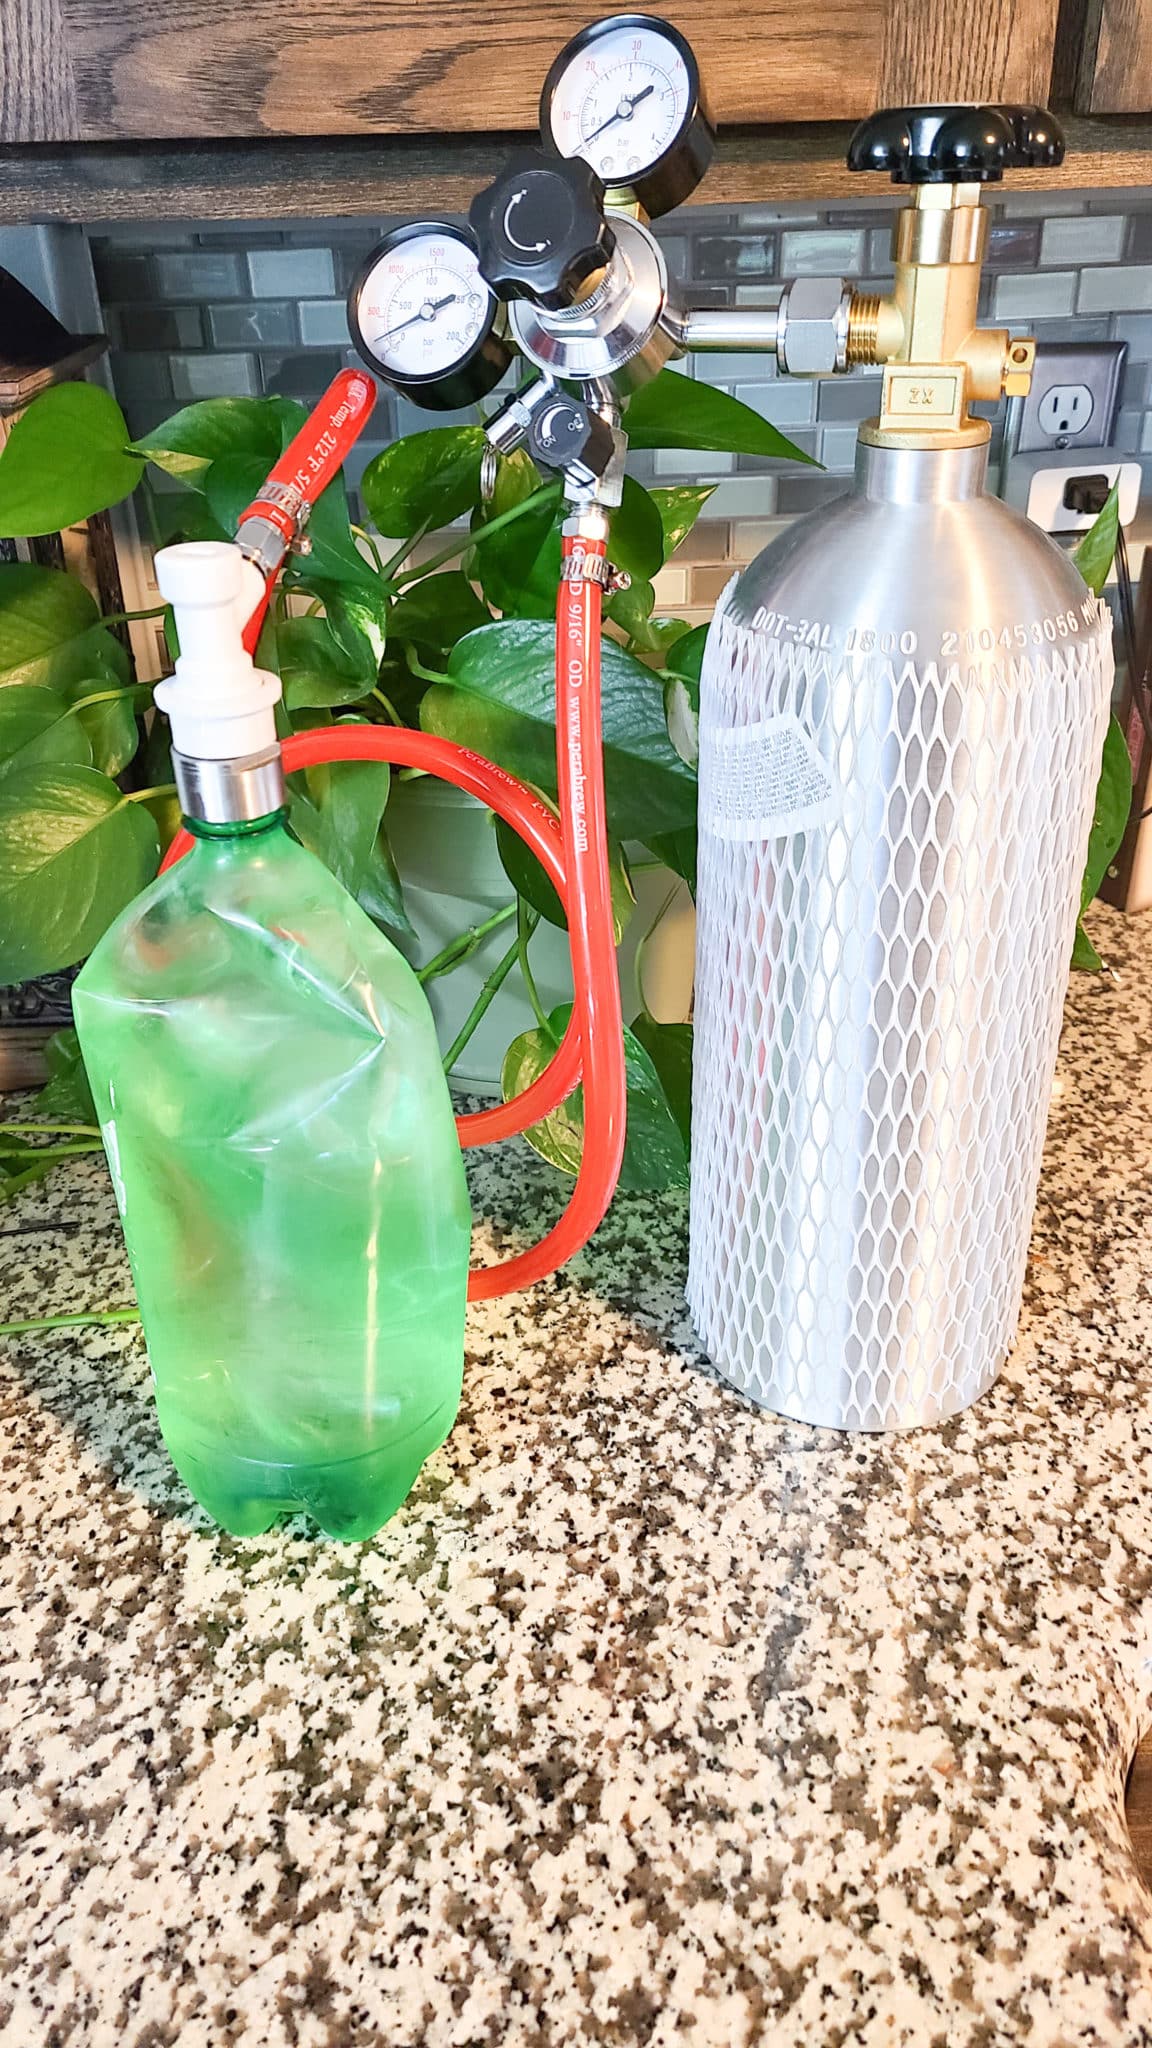 Carbonation process for homemade soda